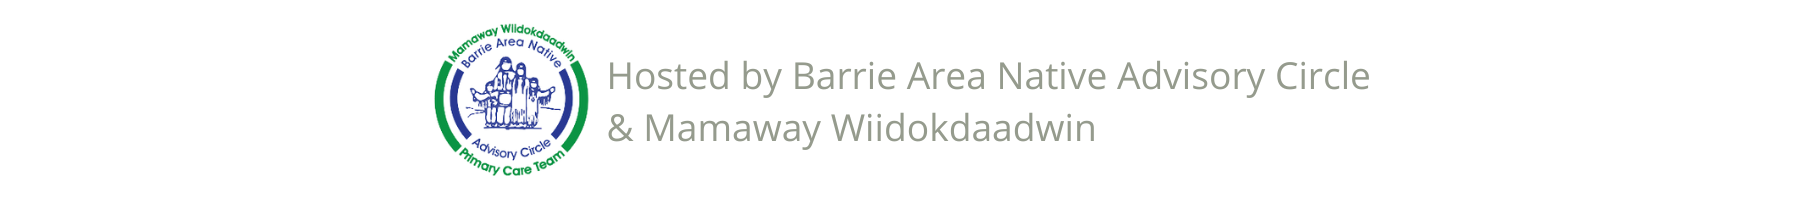 Hosted by Barrie Area Native Advisory Circle & Mamaway Wiidokdaadwin